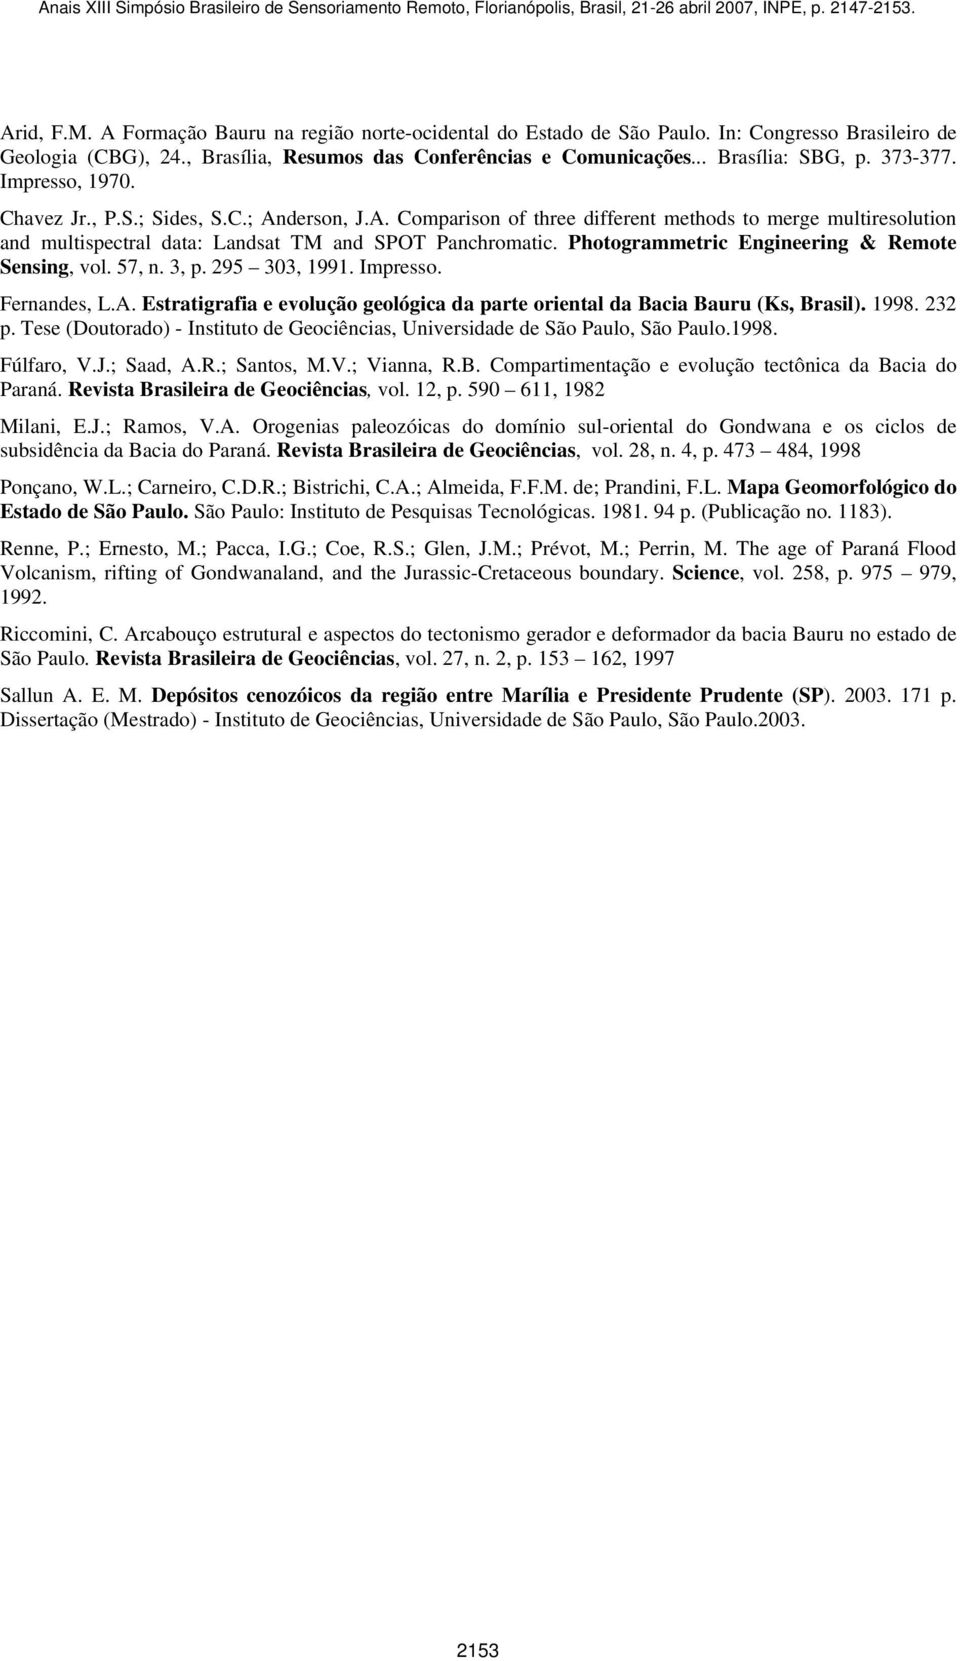 Photogrammetric Engineering & Remote Sensing, vol. 57, n. 3, p. 295 303, 1991. Impresso. Fernandes, L.A. Estratigrafia e evolução geológica da parte oriental da Bacia Bauru (Ks, Brasil). 1998. 232 p.